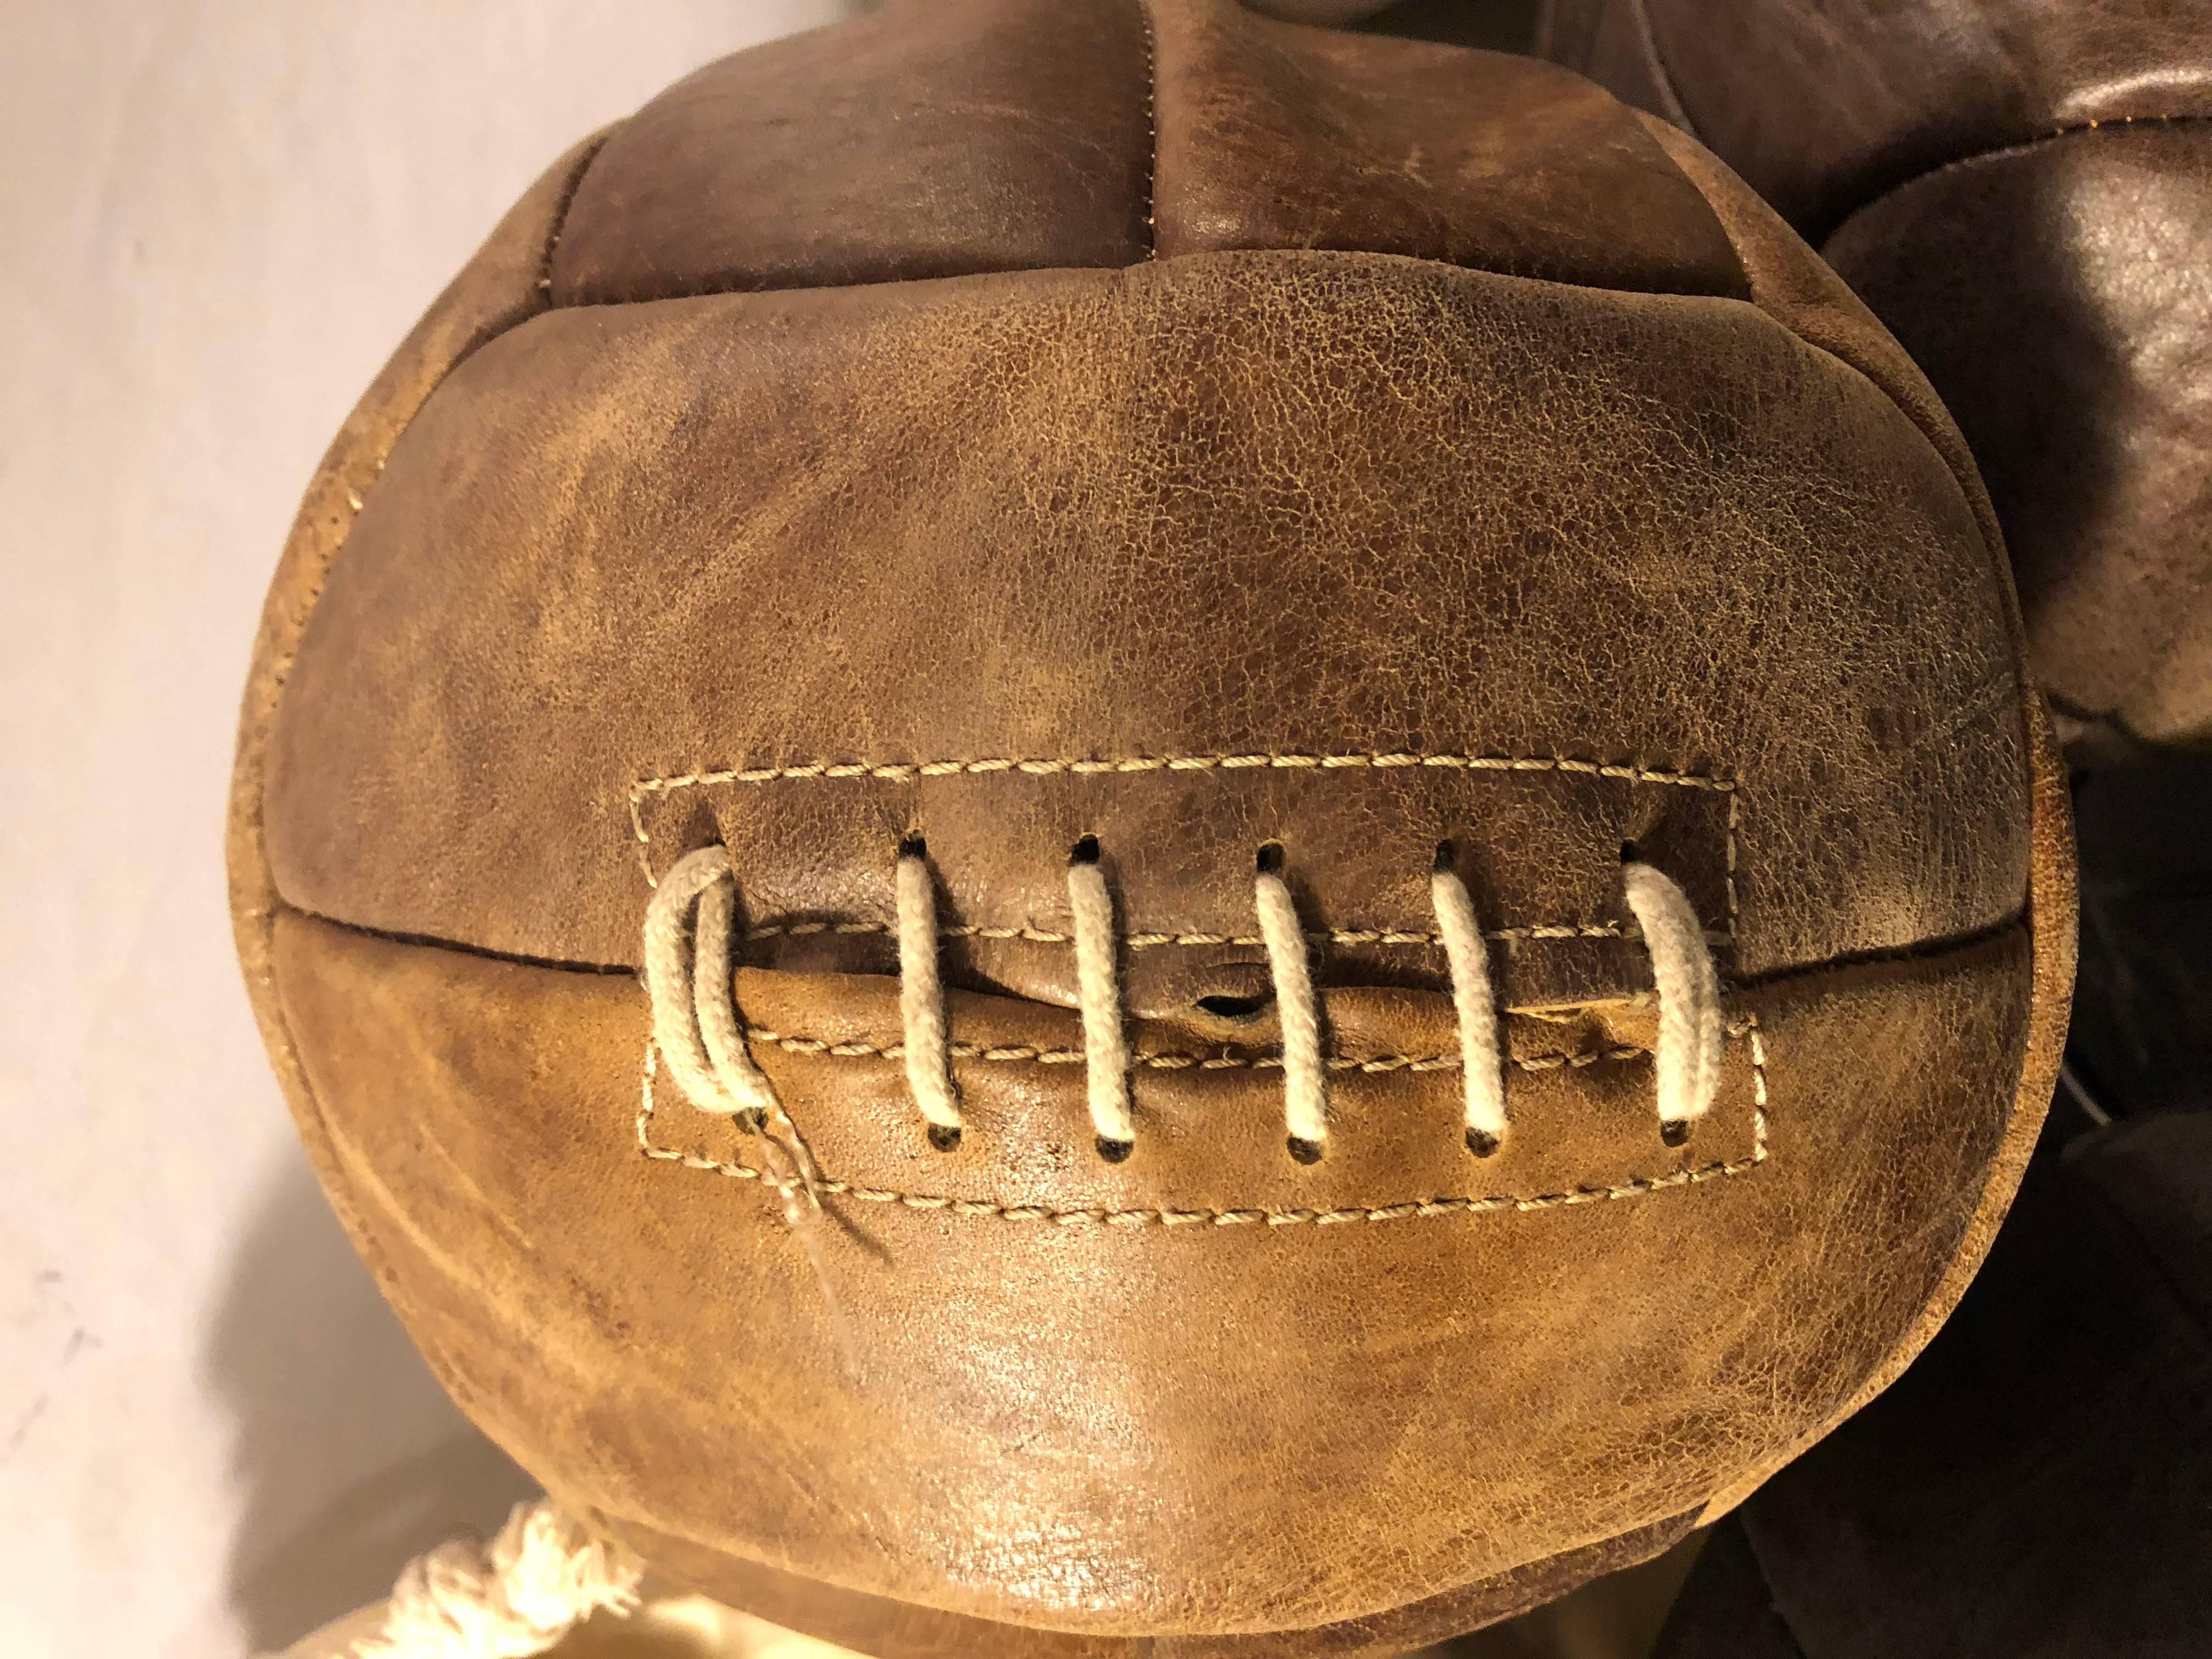 Adirondack Footballs and Soccer Balls by Timothy Oulton, Selling Individually Seven Avail